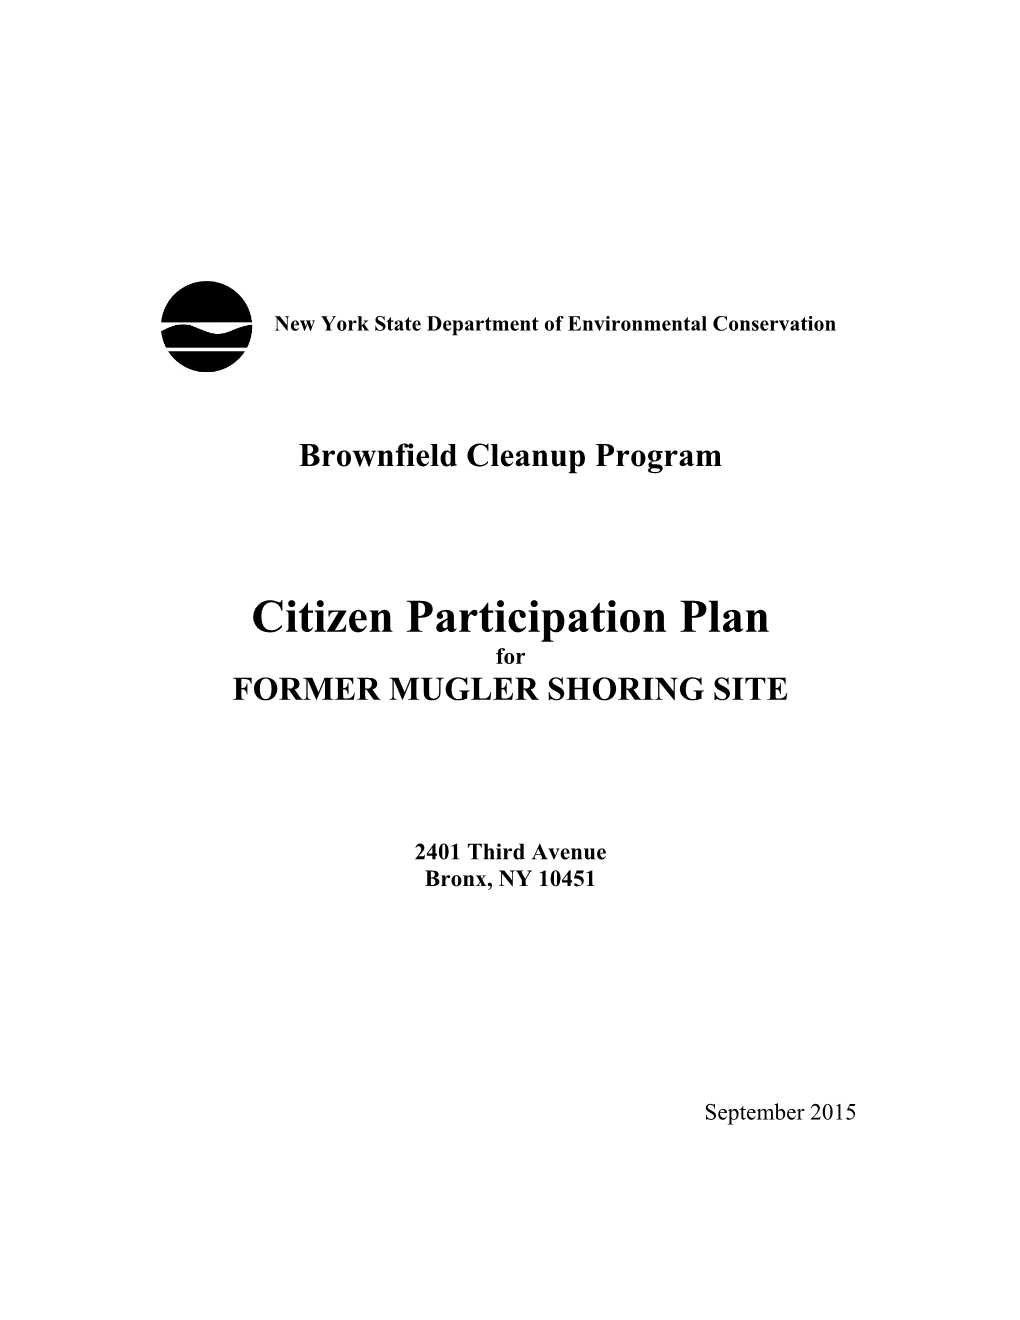 Citizen Participation Plan for FORMER MUGLER SHORING SITE